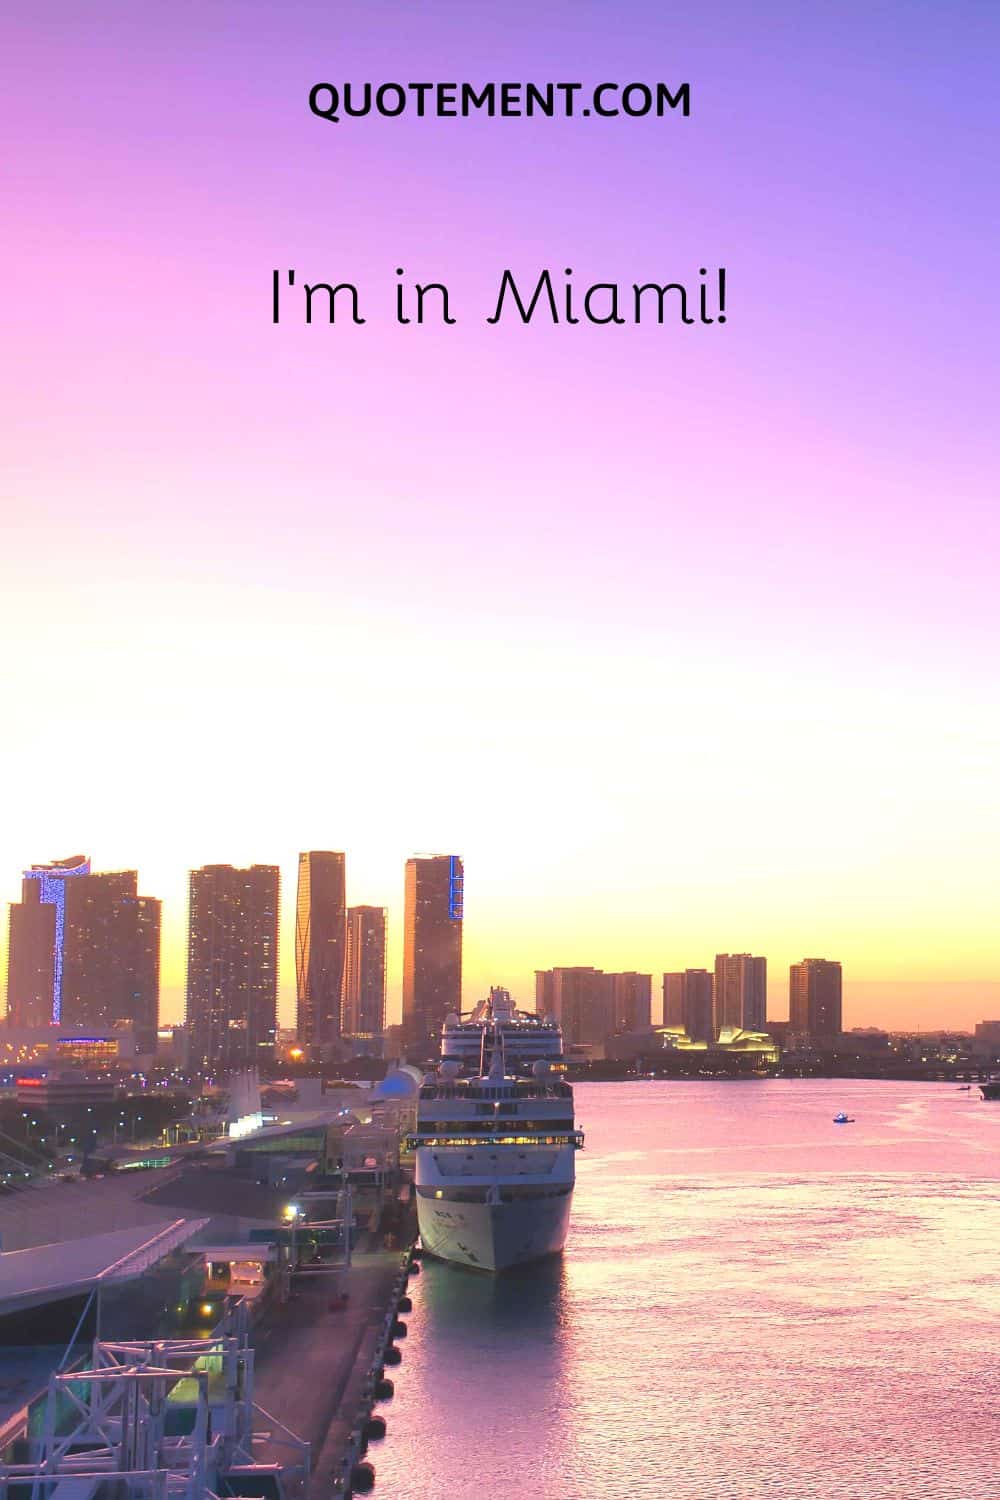 I’m in Miami